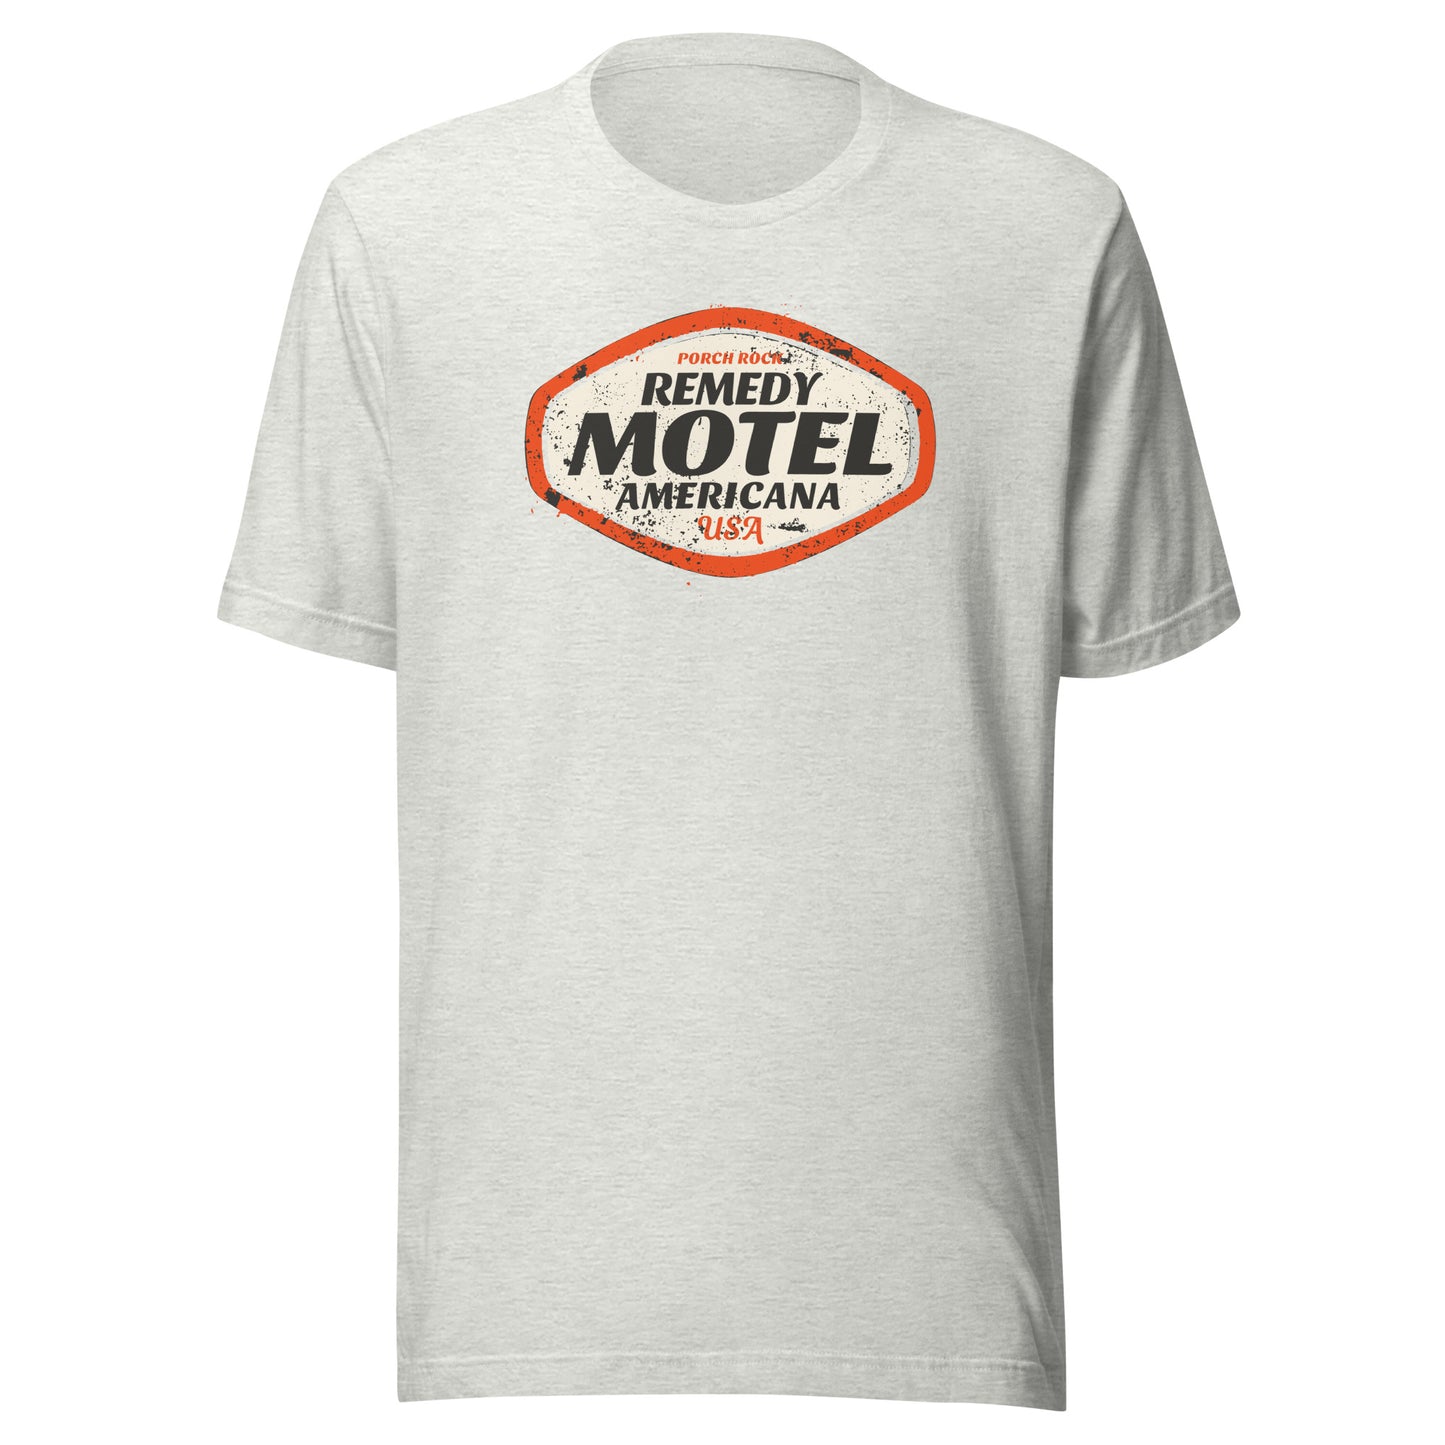 Remedy Motel is Porch Rock Americana T-shirt